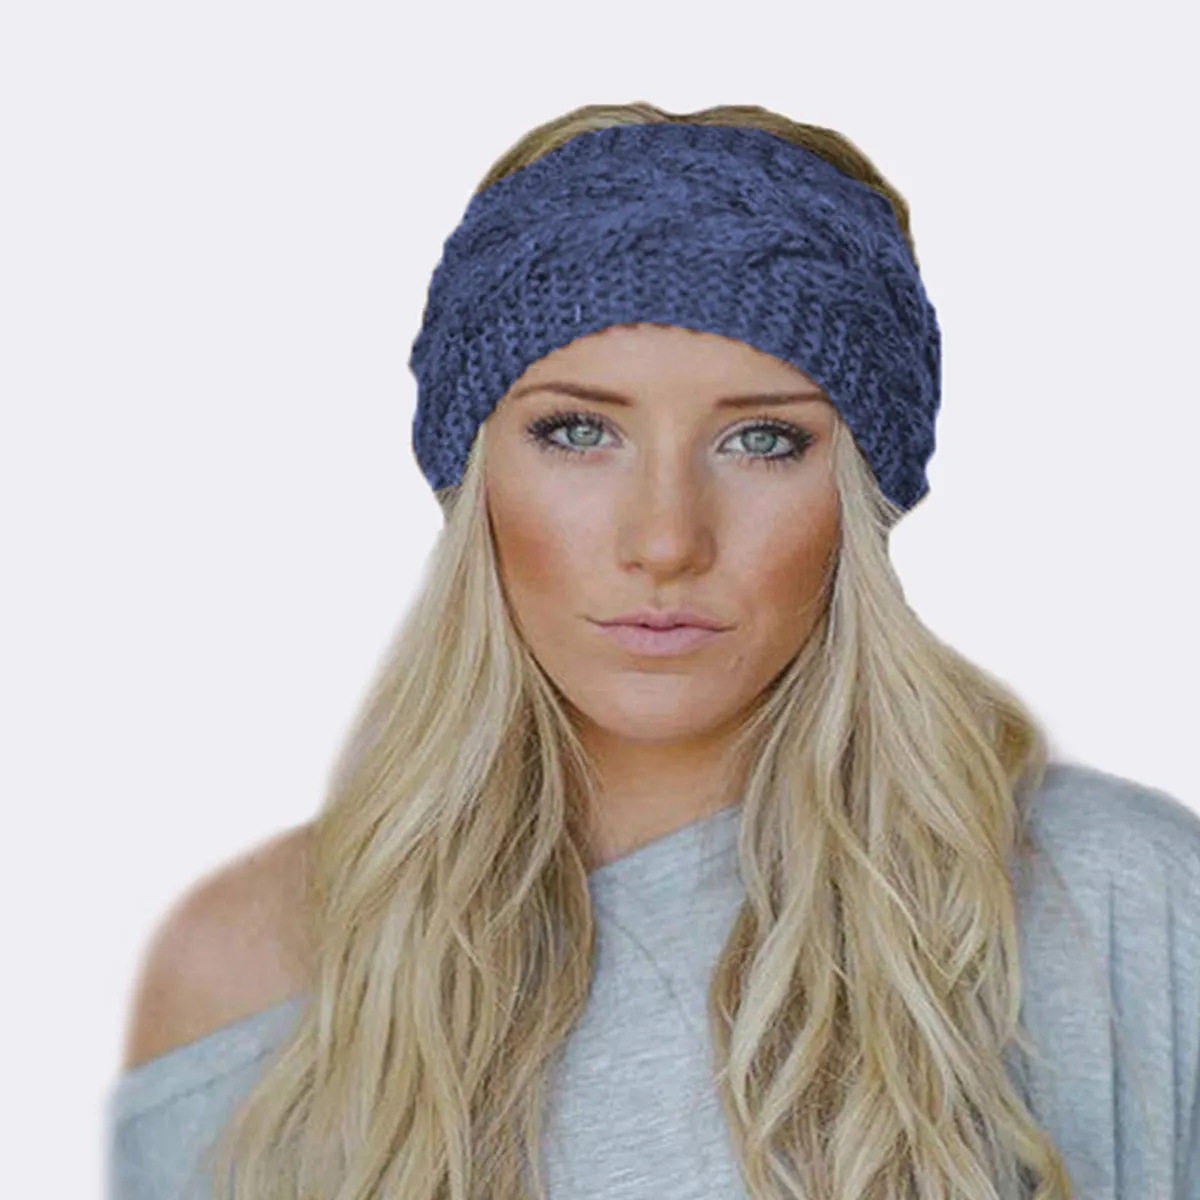 Chunky Knit Headbands Crochet Braided Hair Band Ear Warmer Head Wraps Cable Hairband knitted headbands women winter